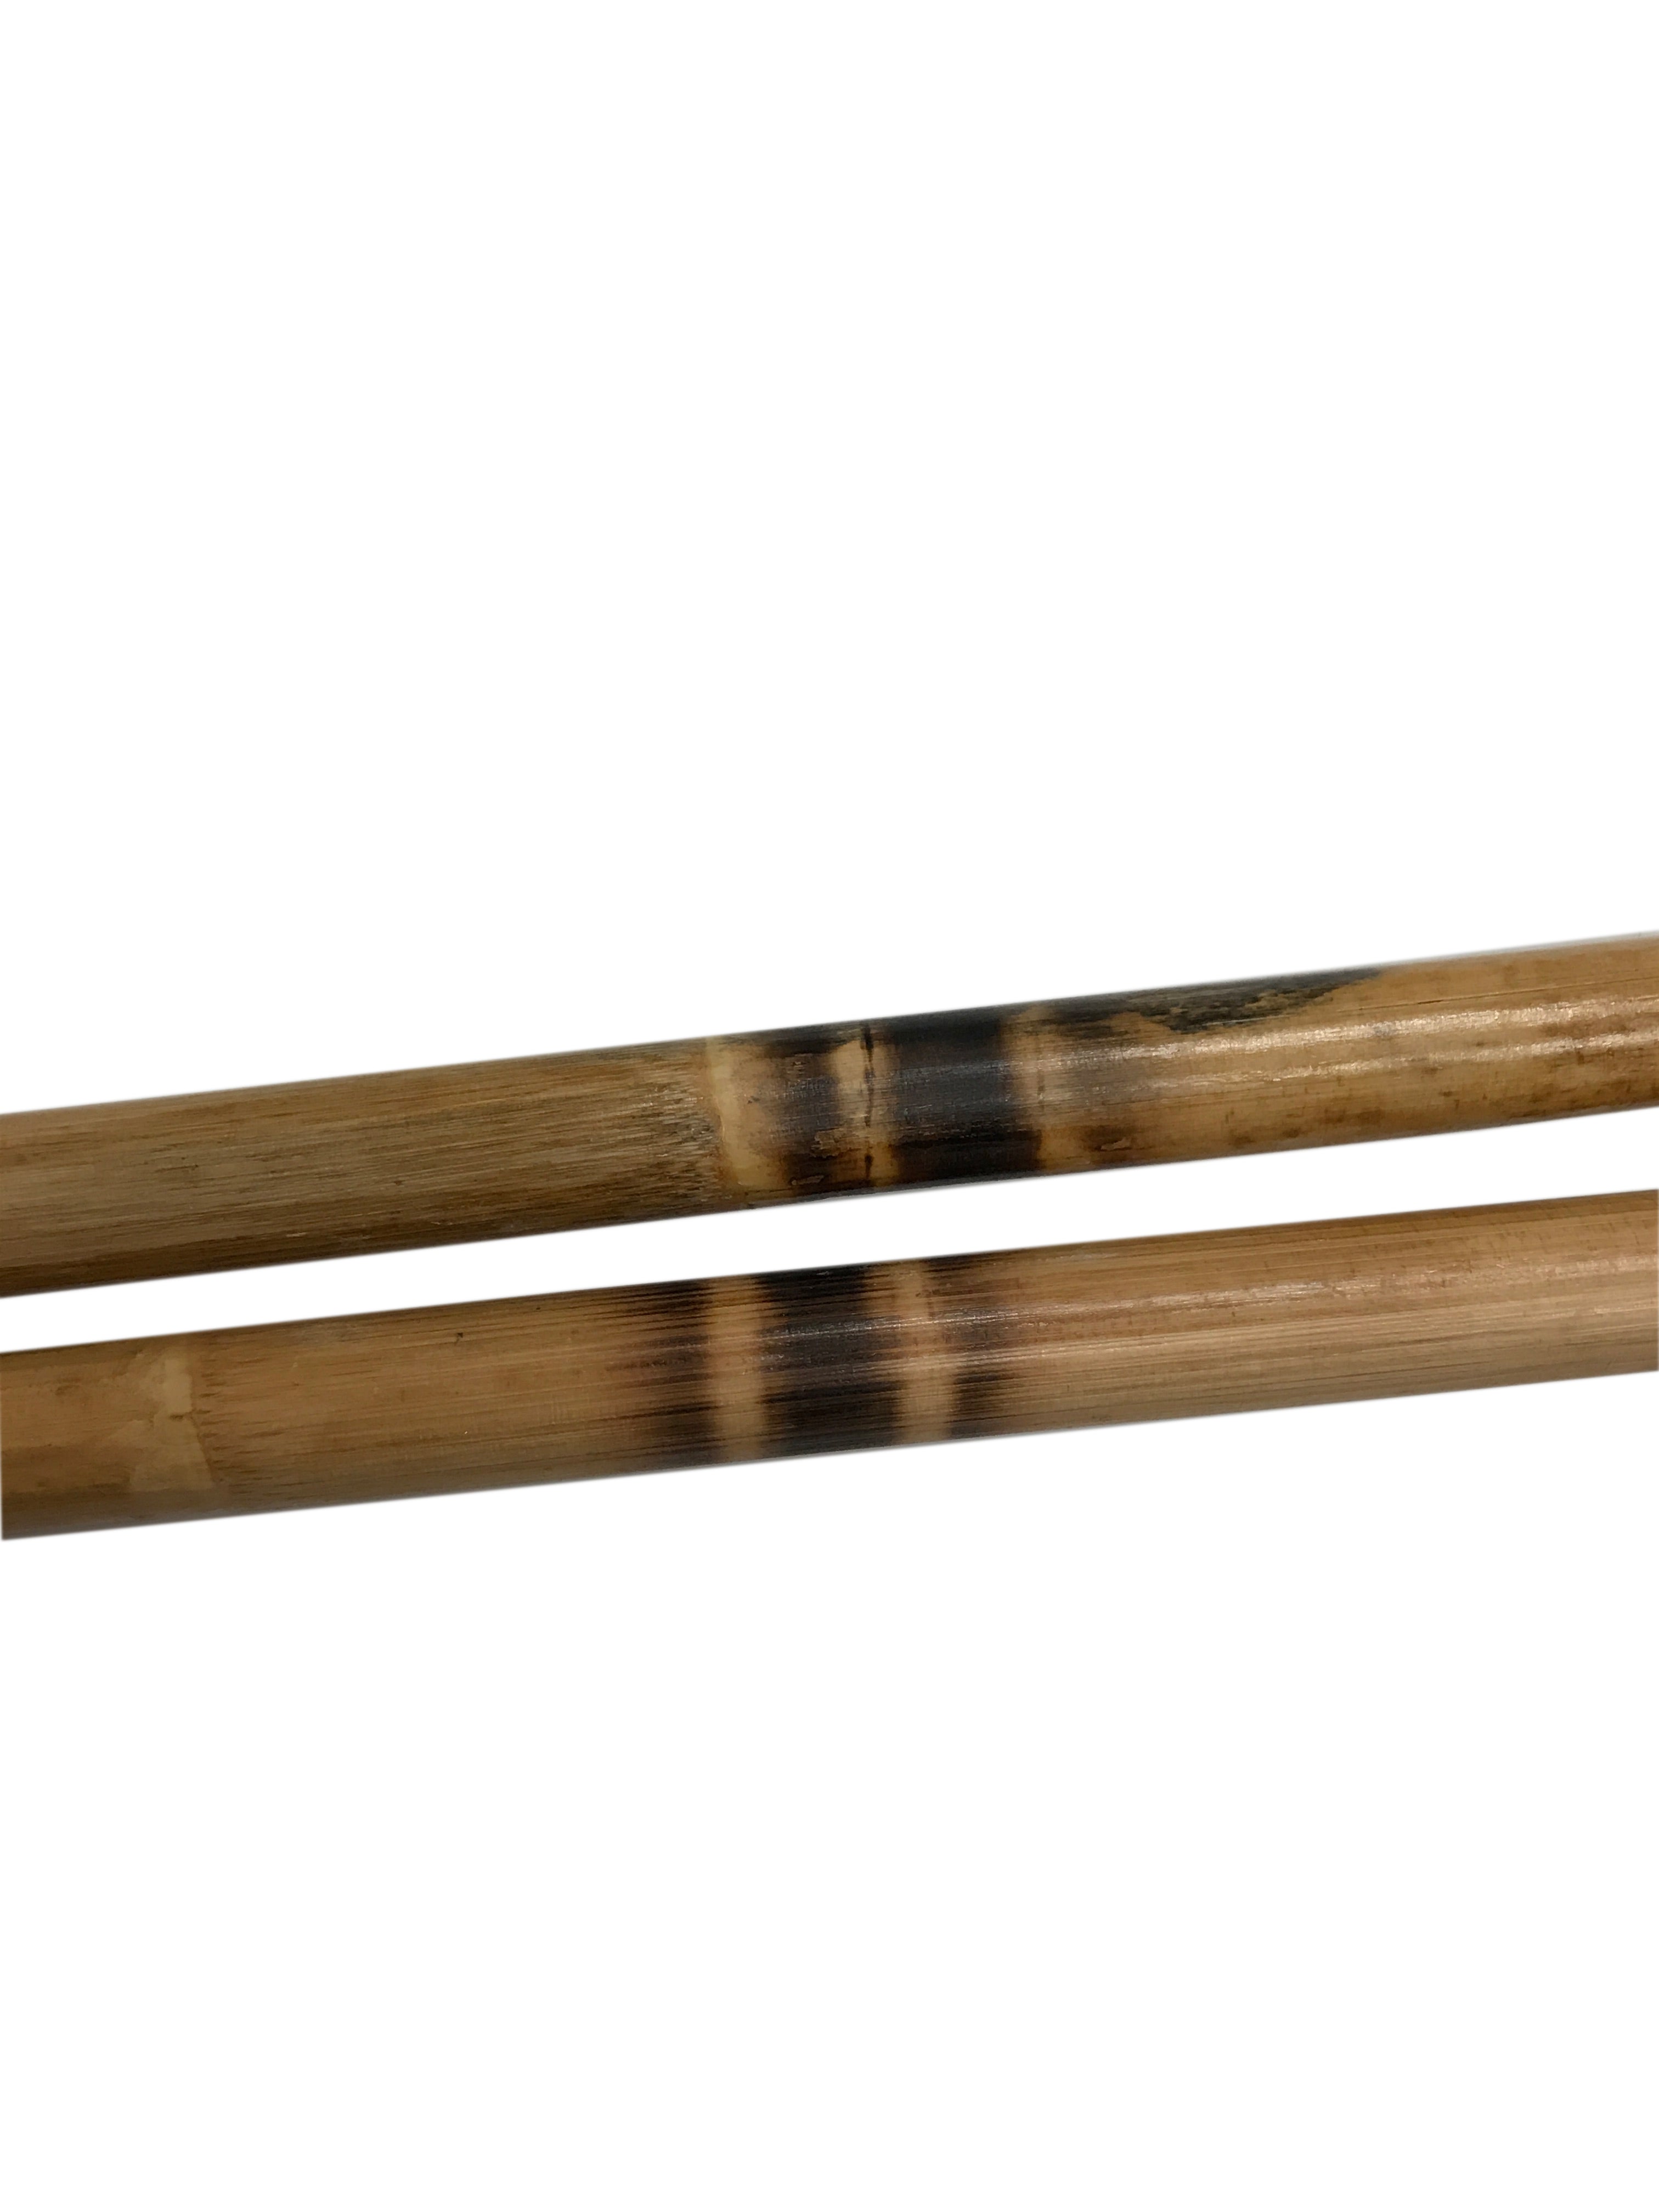 2 Filipino Martial Arts Escrima Kali Arnis Burned Rattan Speed Sticks 28" x .85"